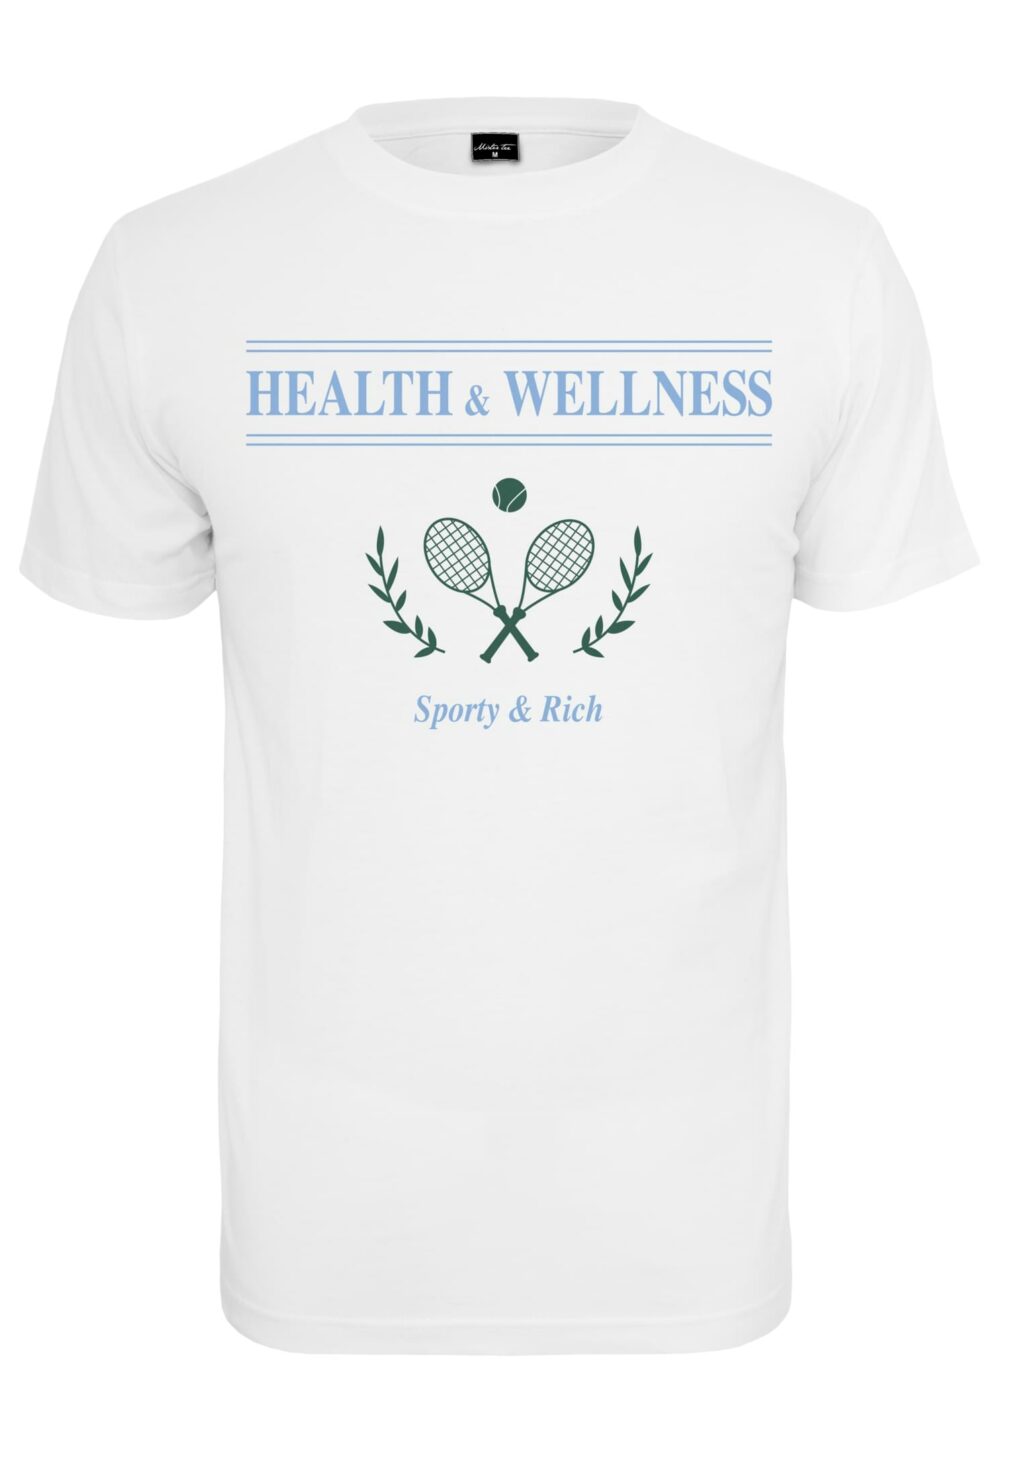 Health & Wellness Tee white MT2045